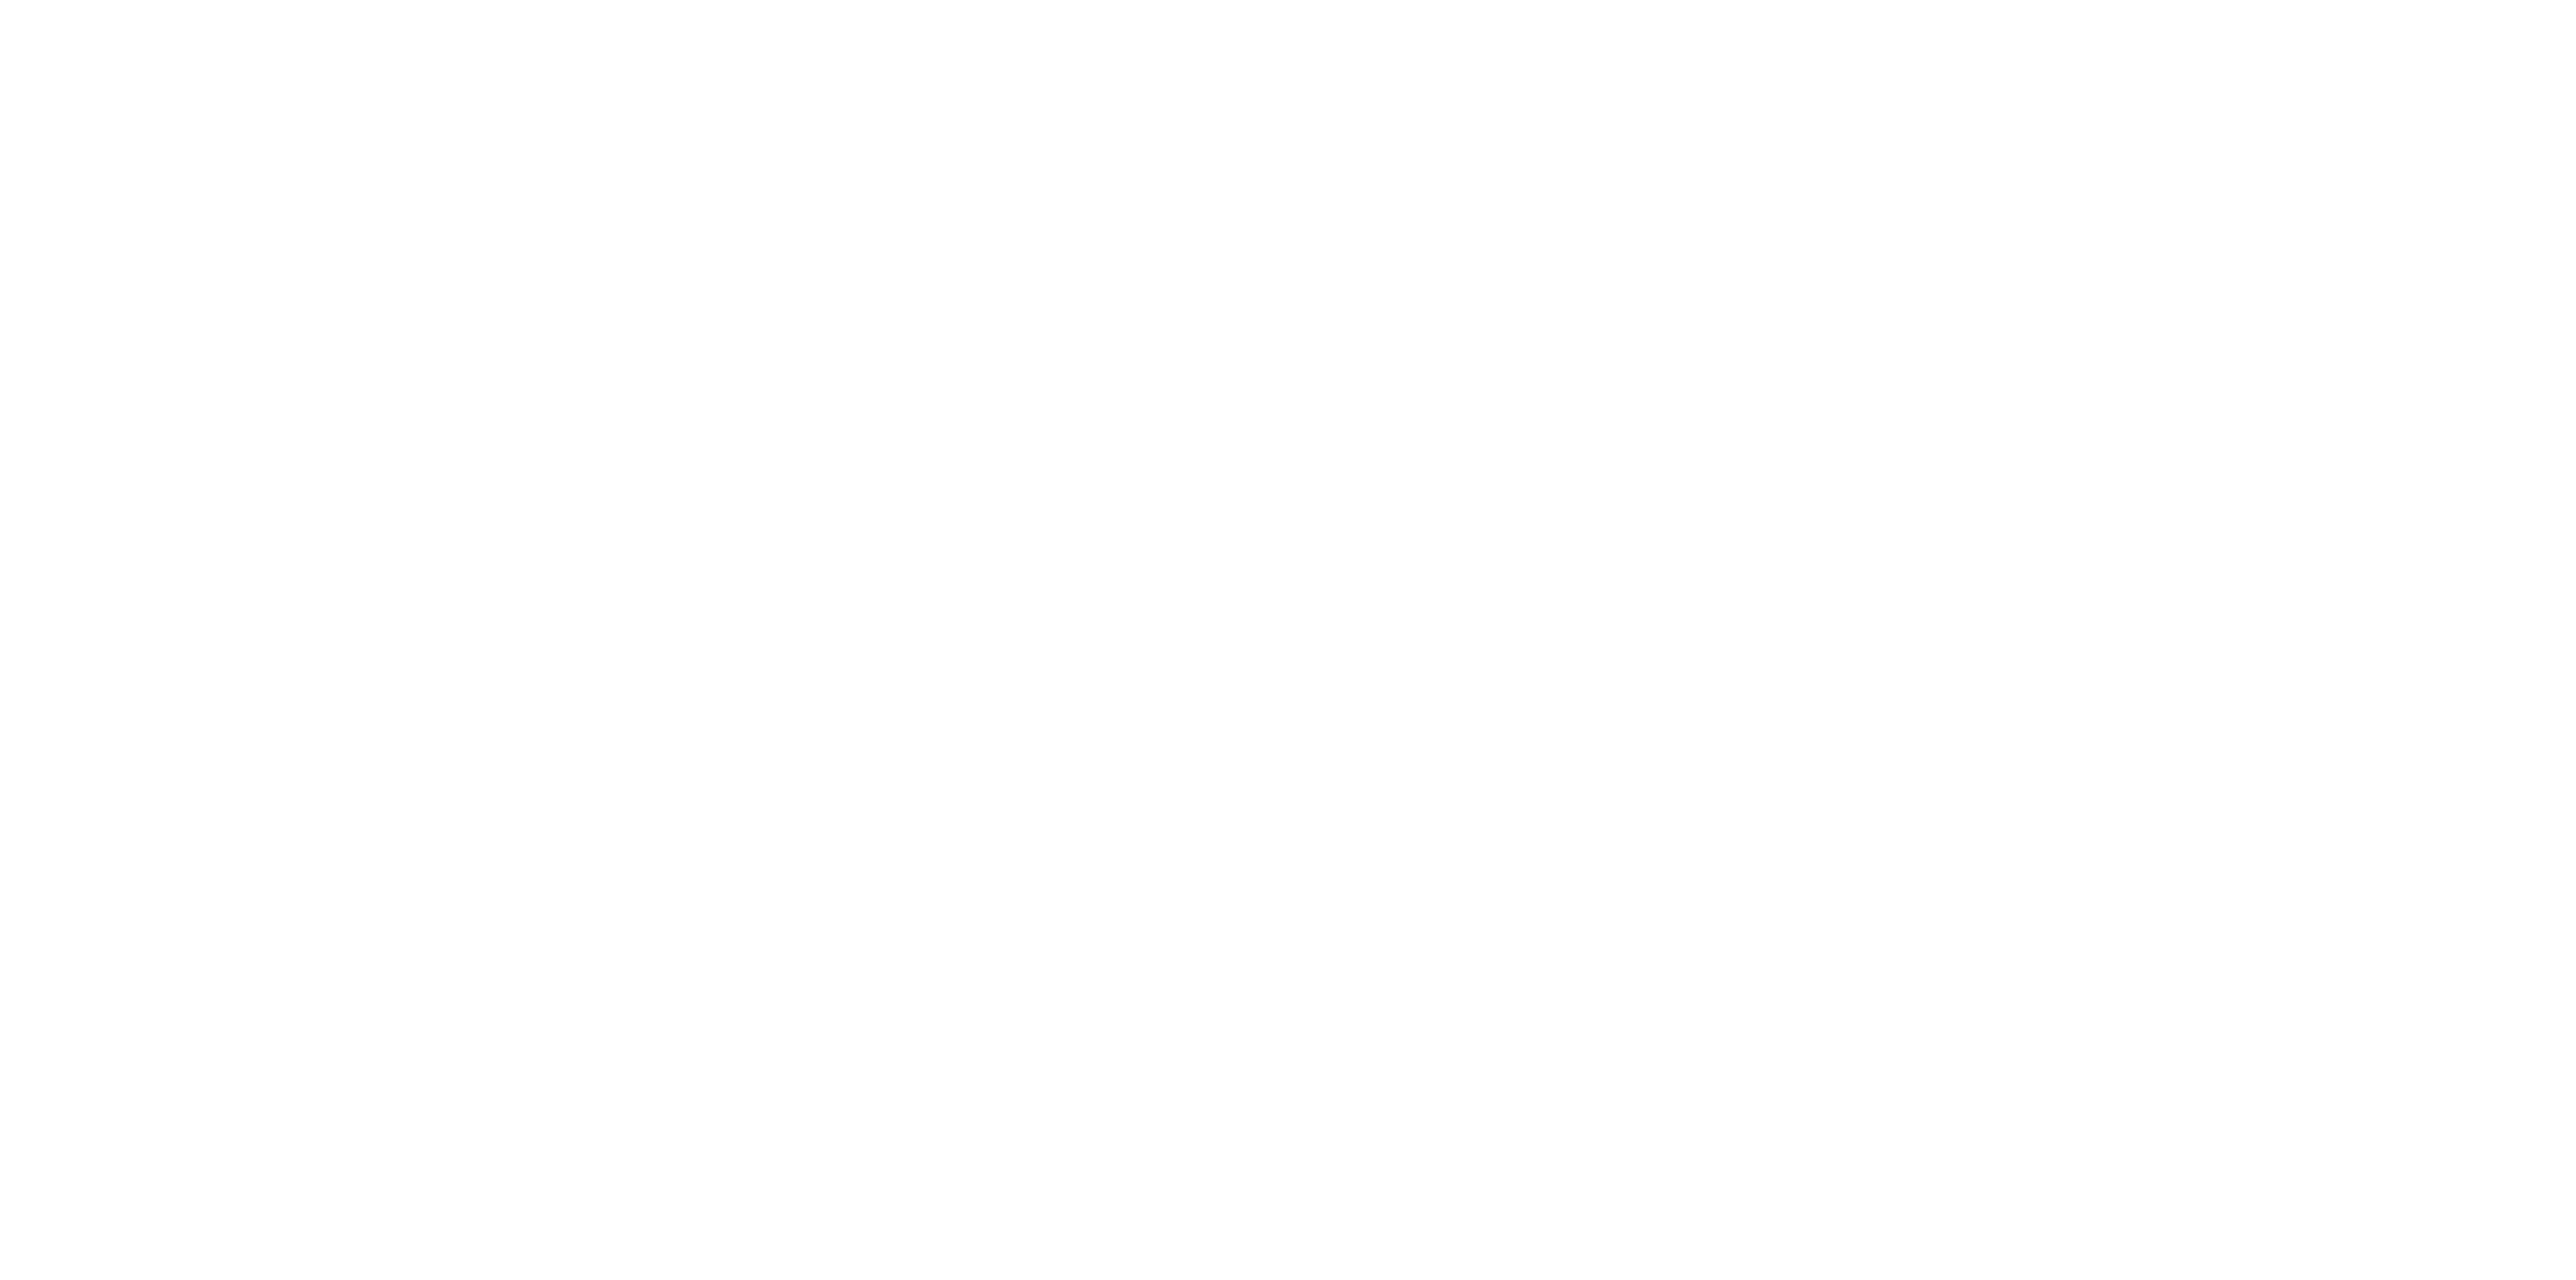 HRDF Logo